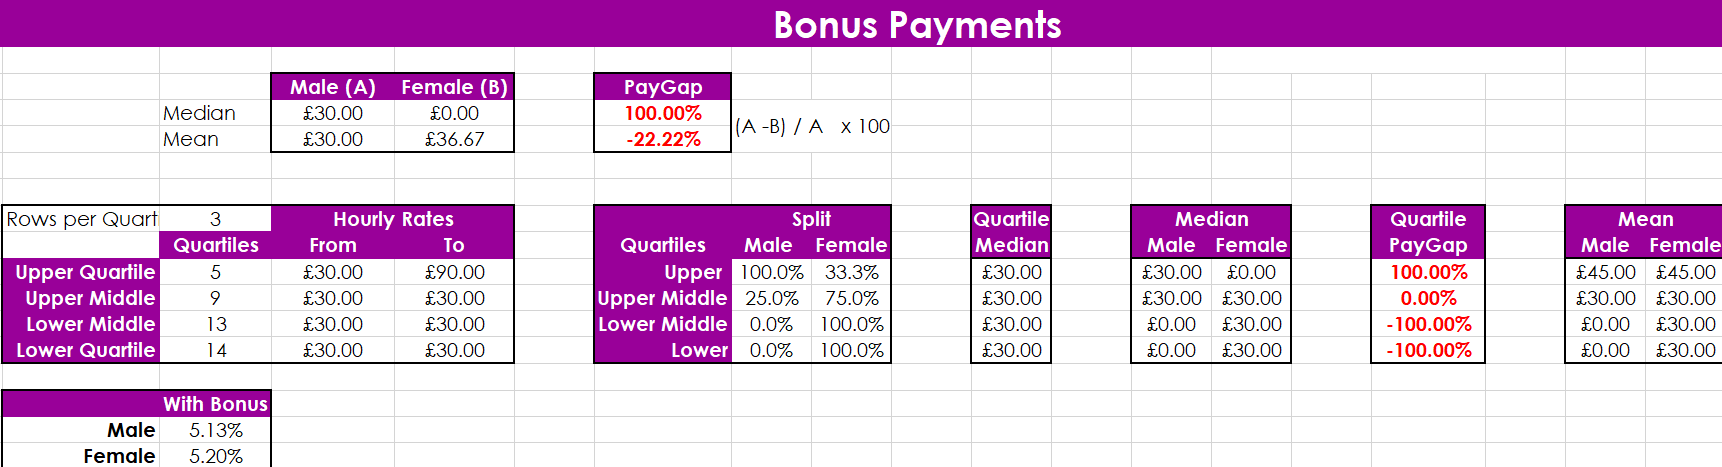 Bonus Payments Statistics